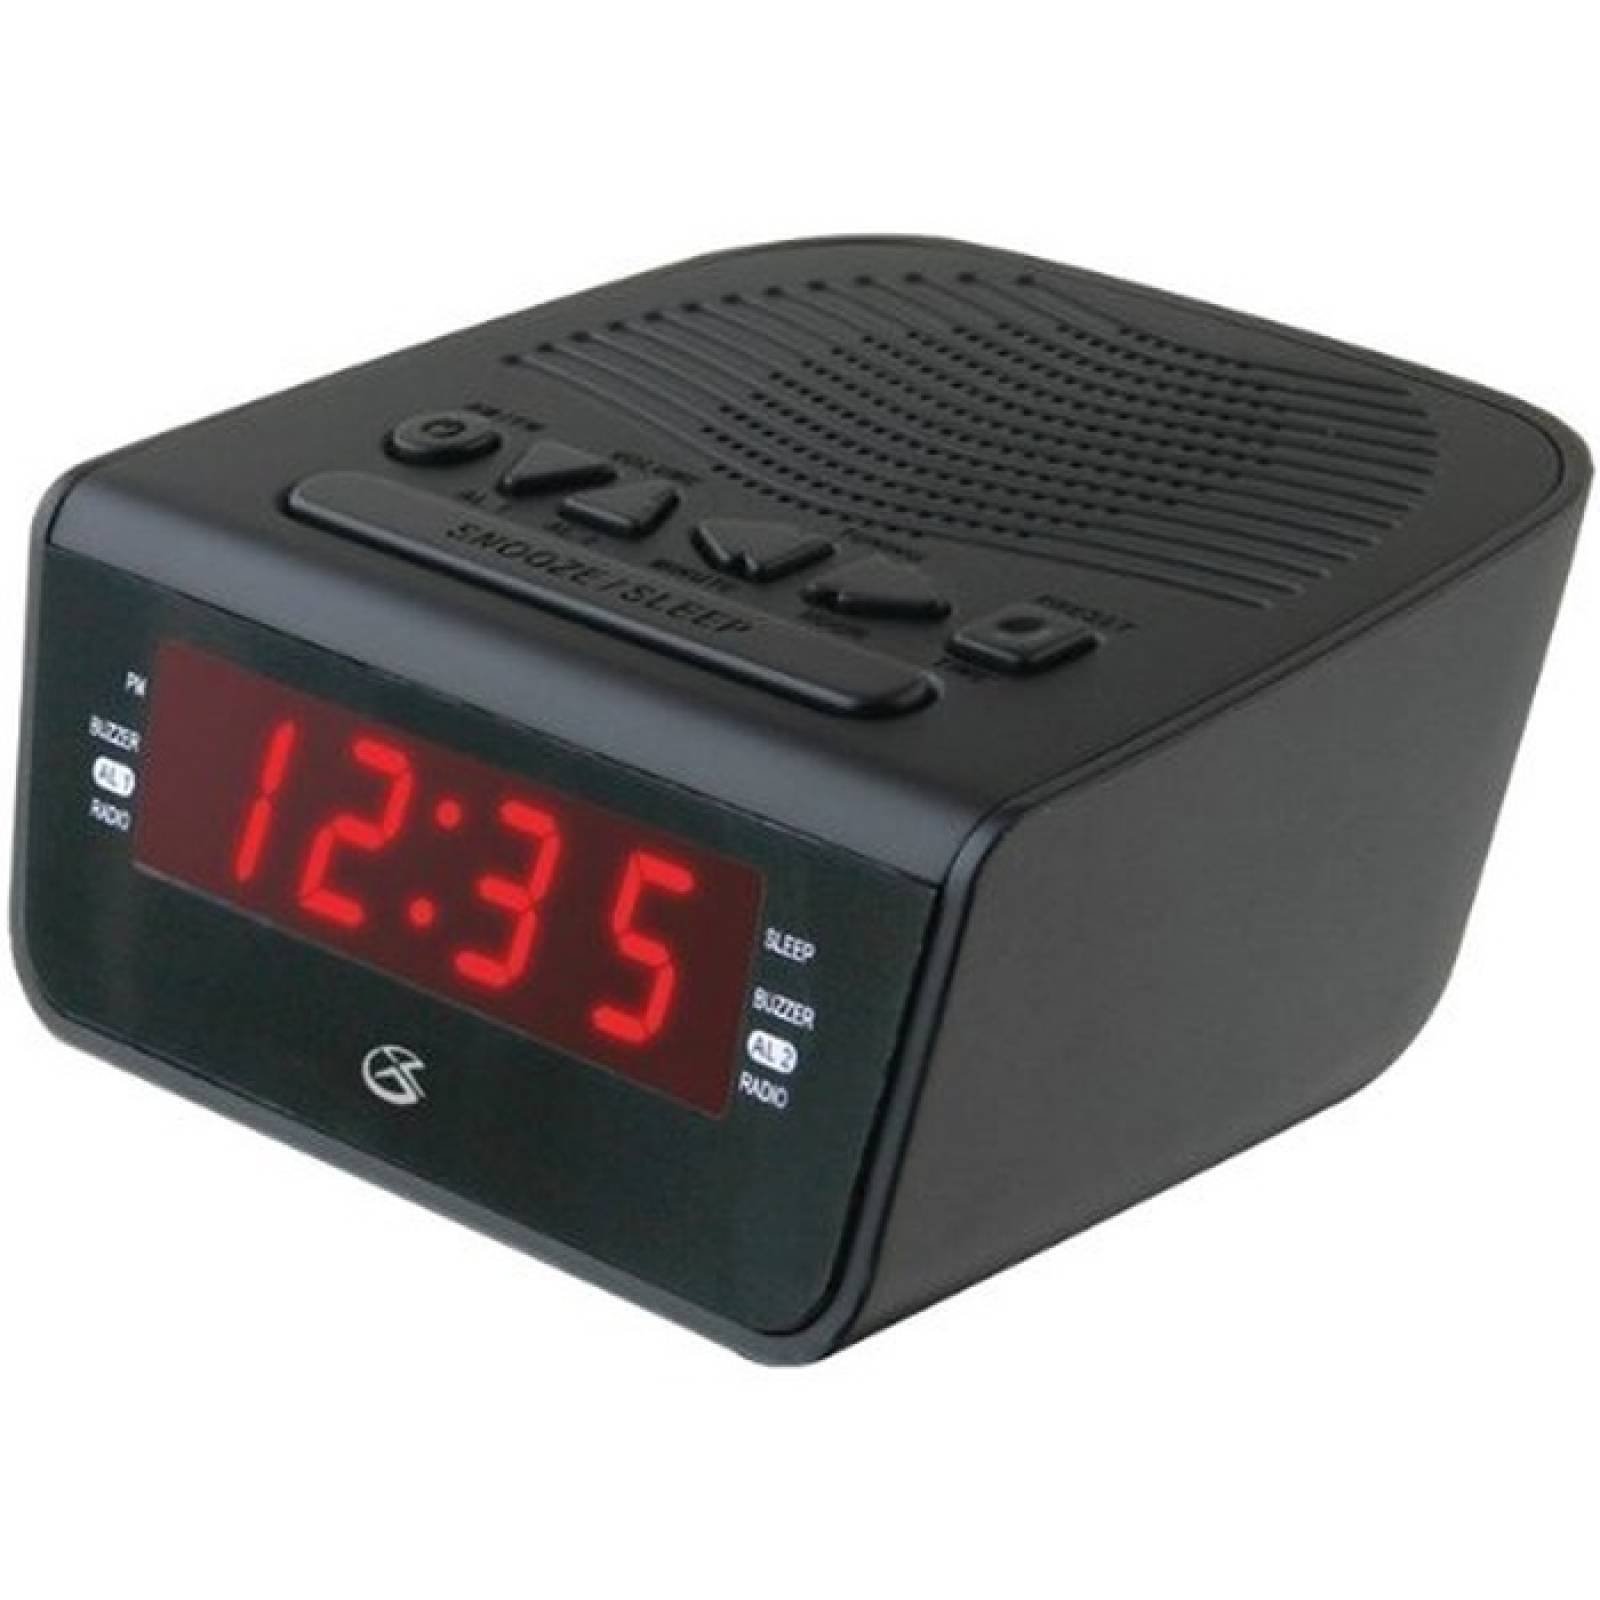 GPX C224B radio reloj de escritorio